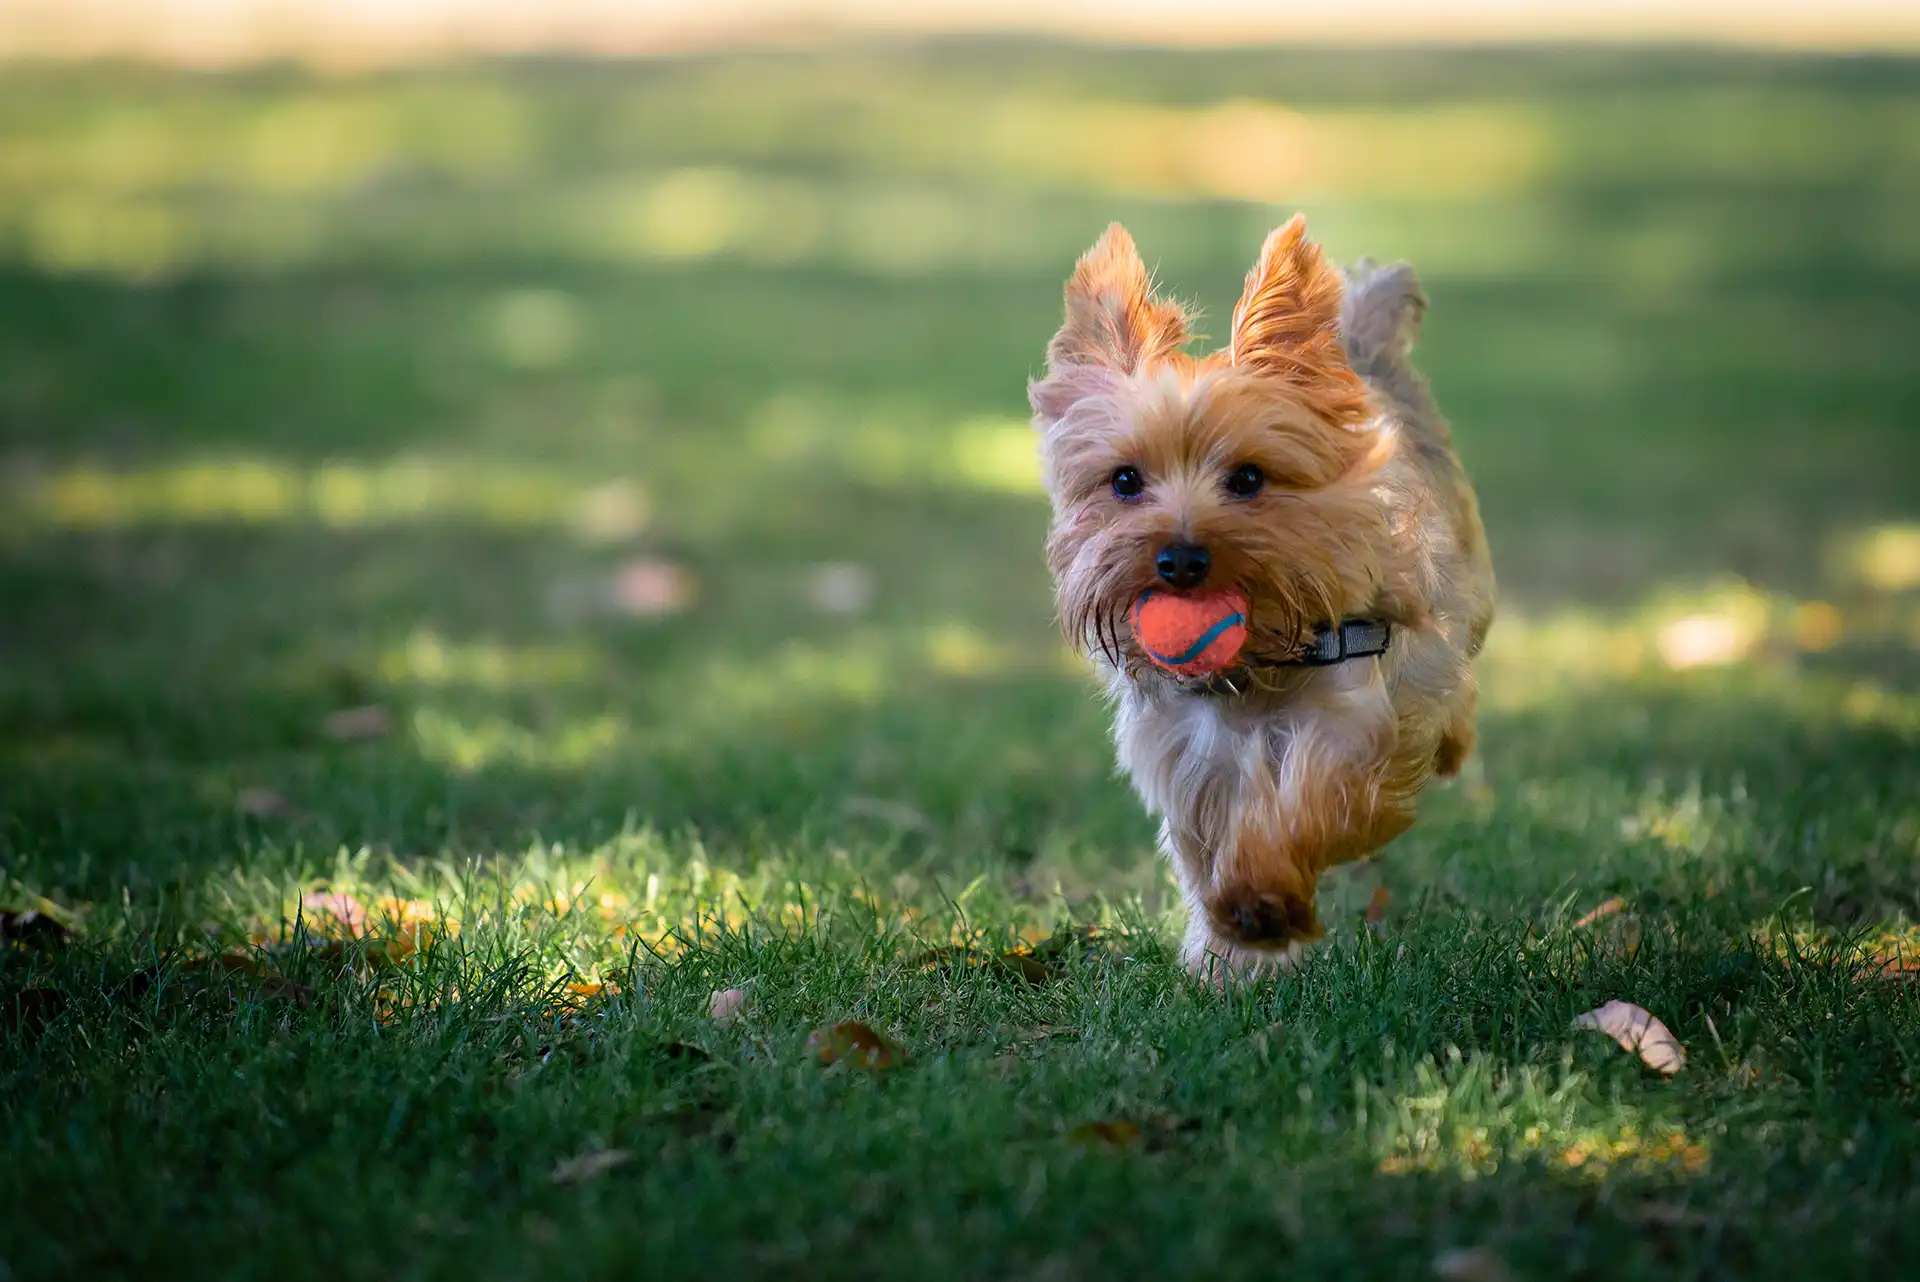 Small fluffy dog running across grass.